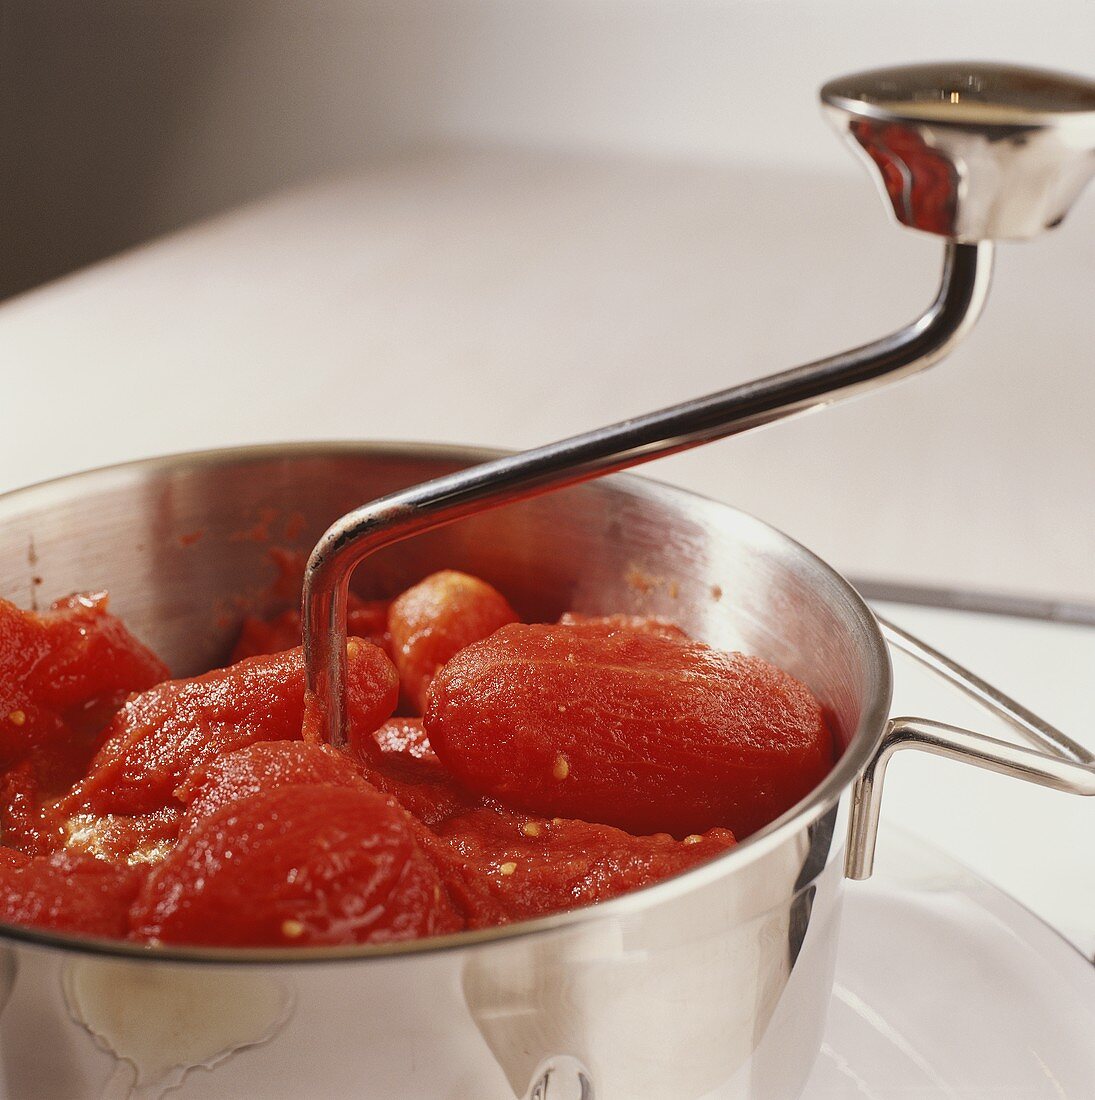 Pureeing tomatoes